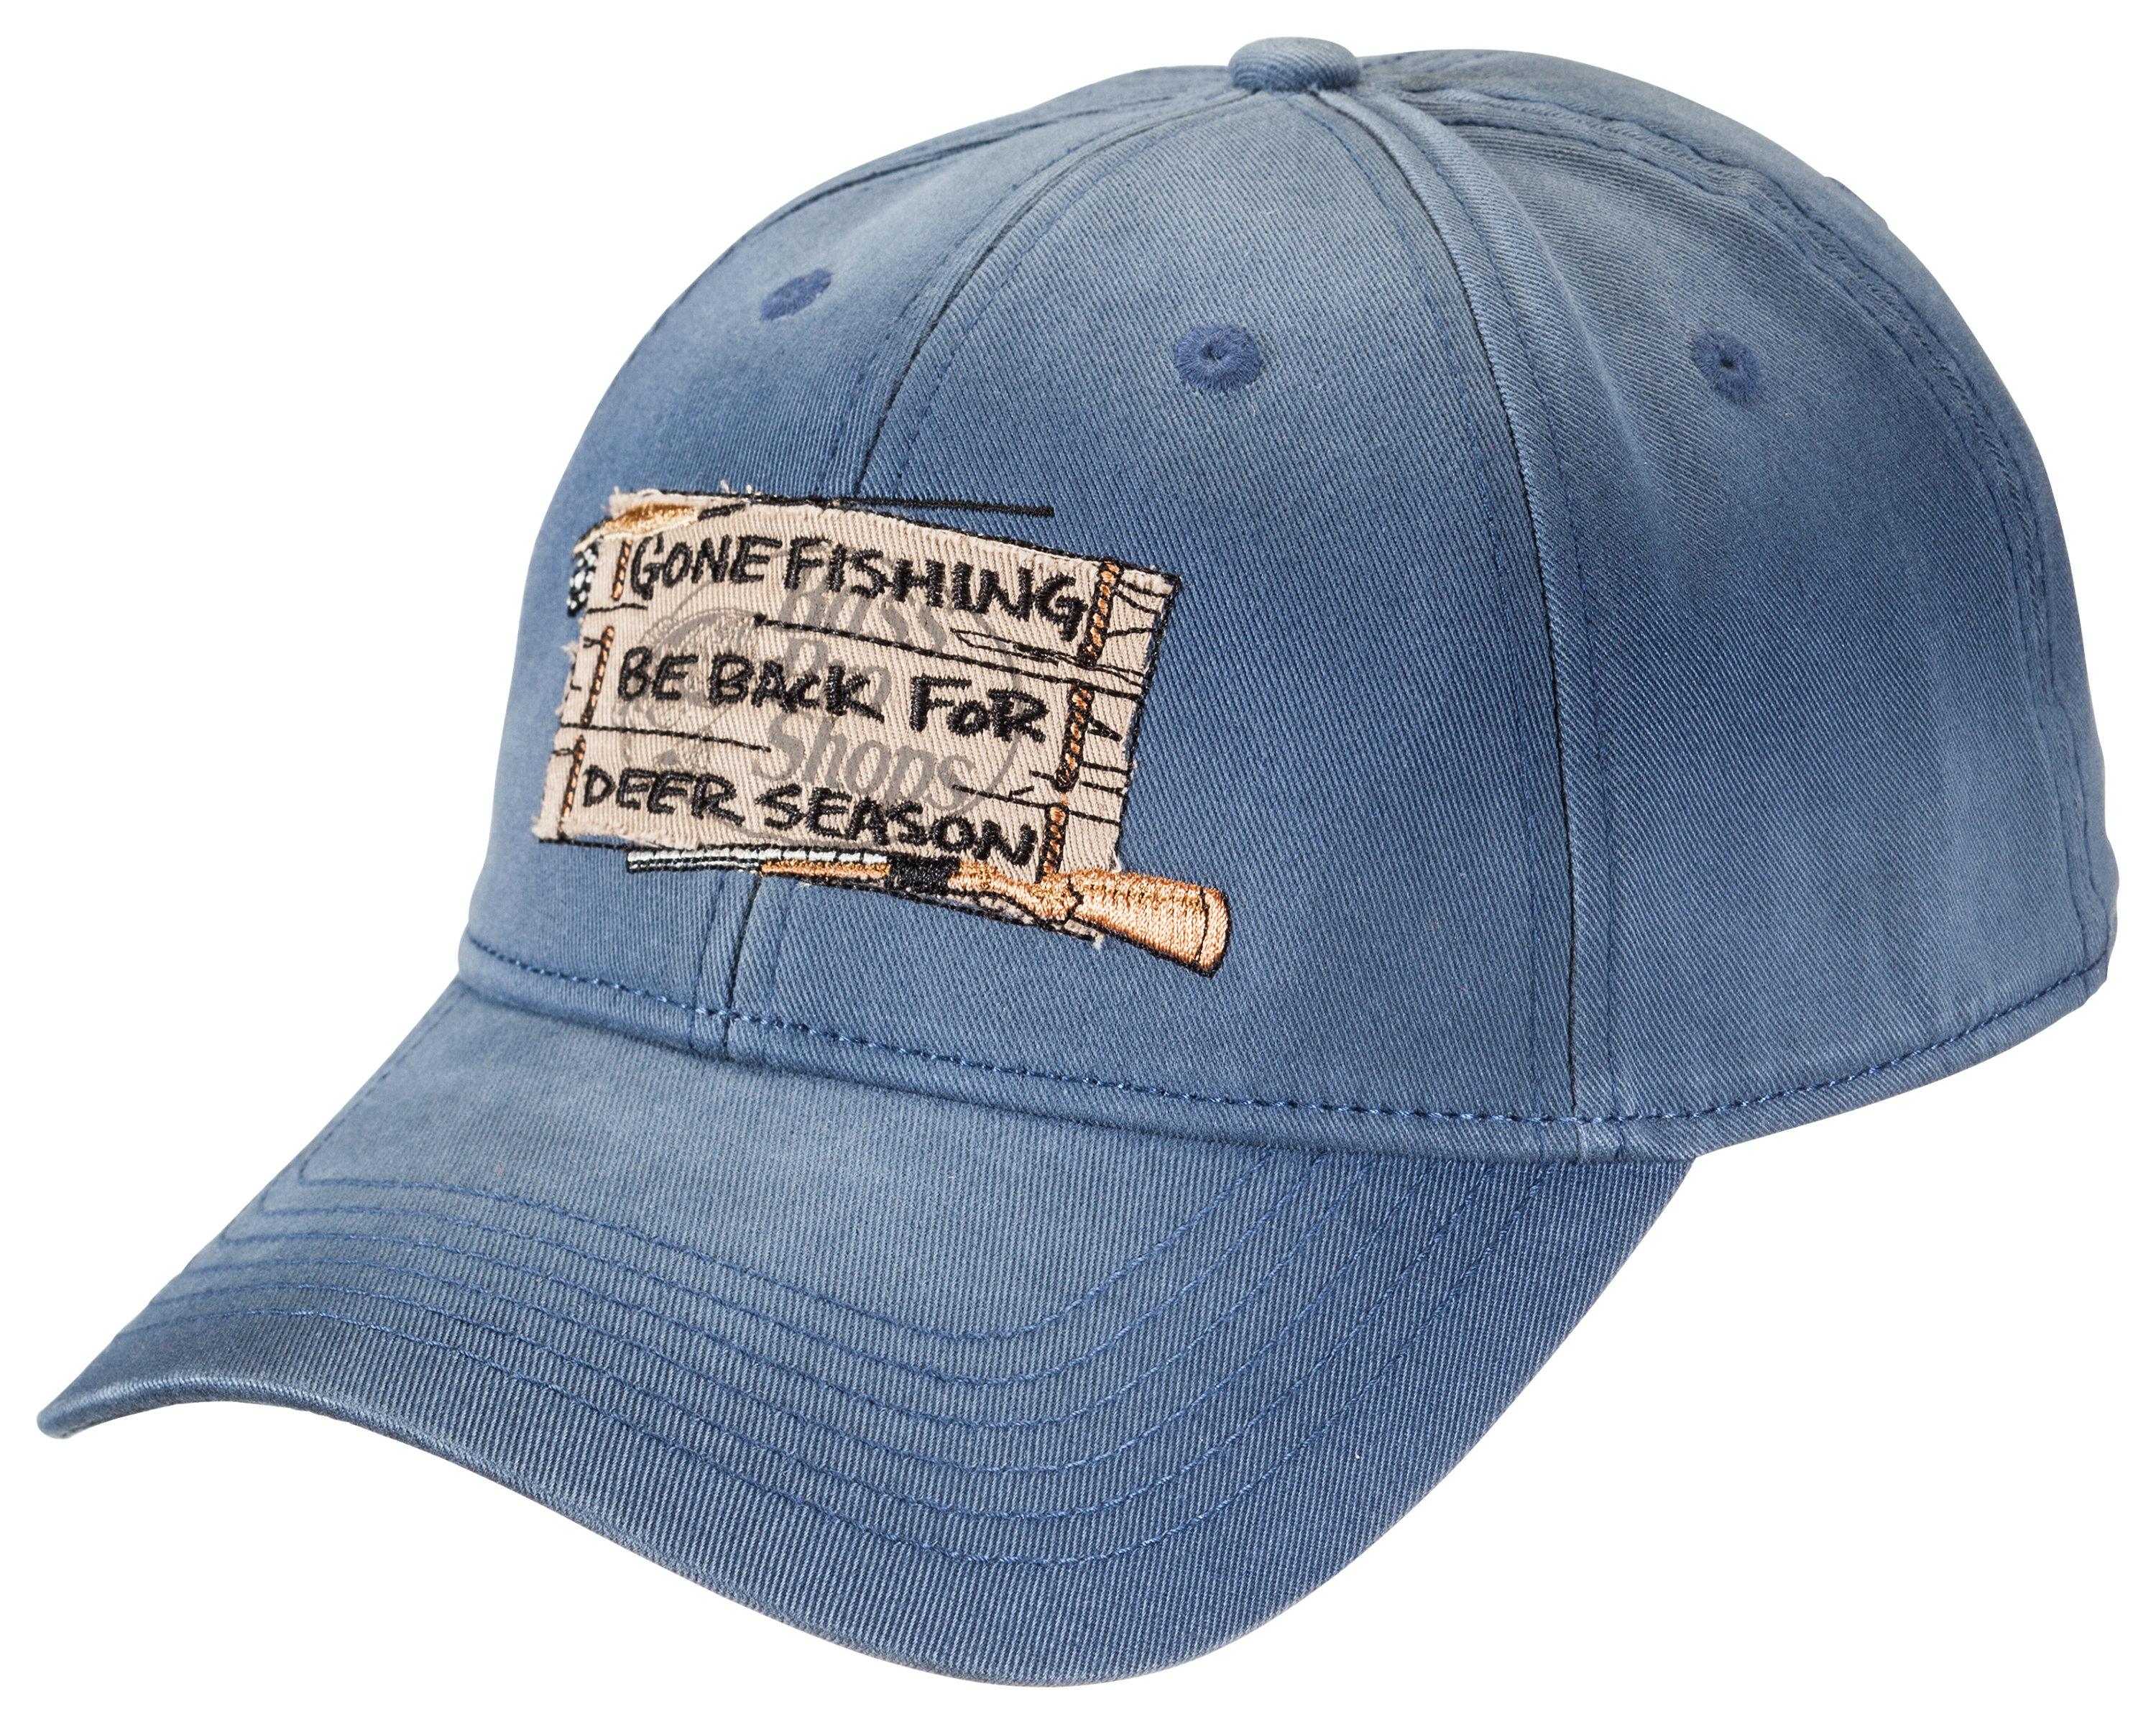 Bass Pro Shops Vintage Gone Fishing Cap